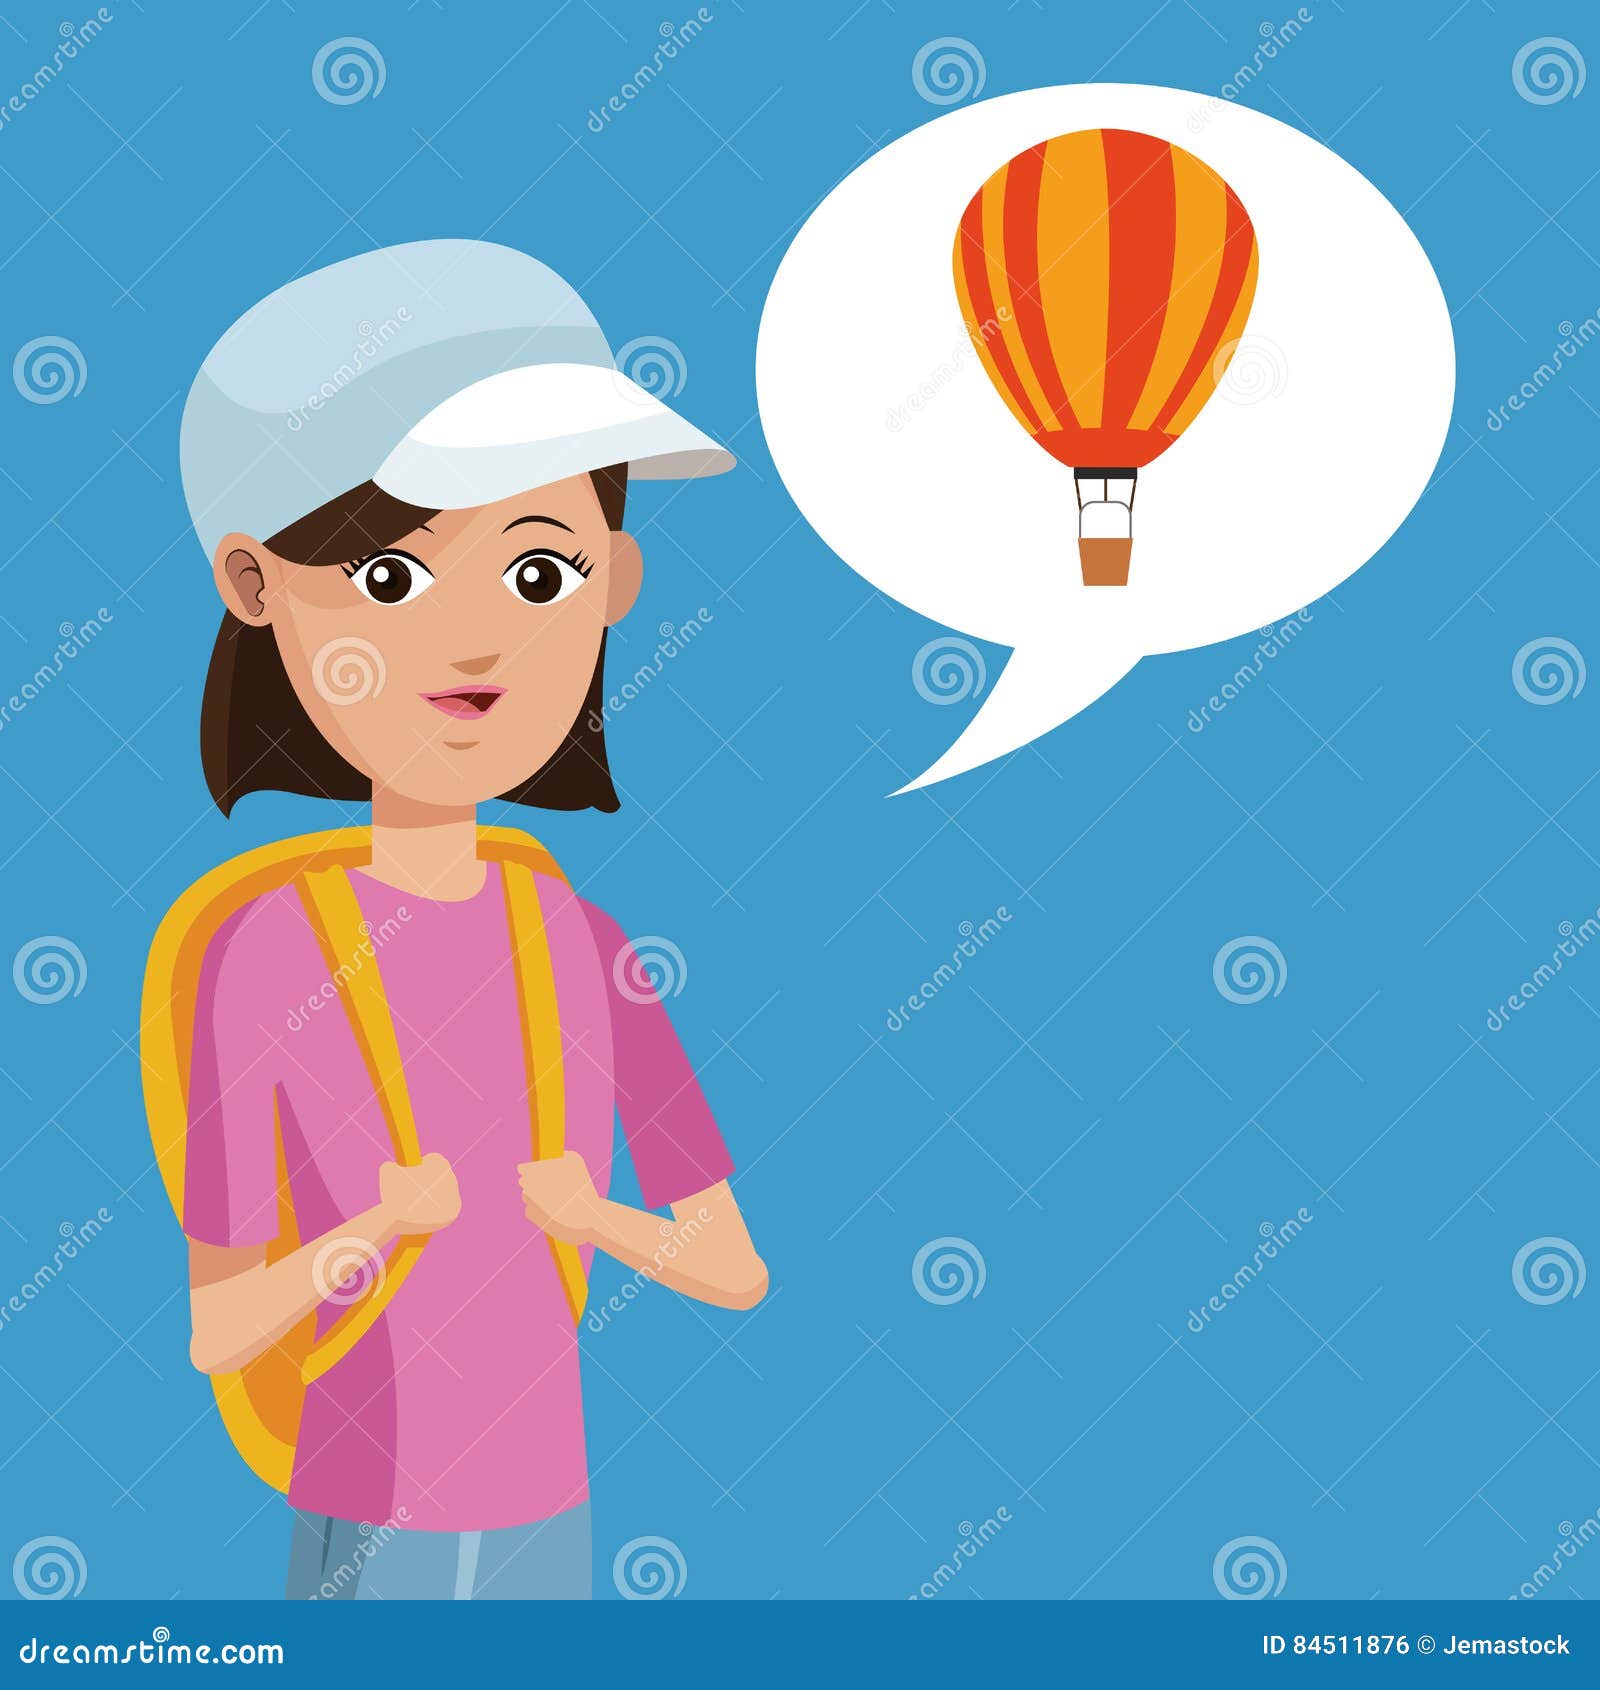 young girl rucksack travel airballoon